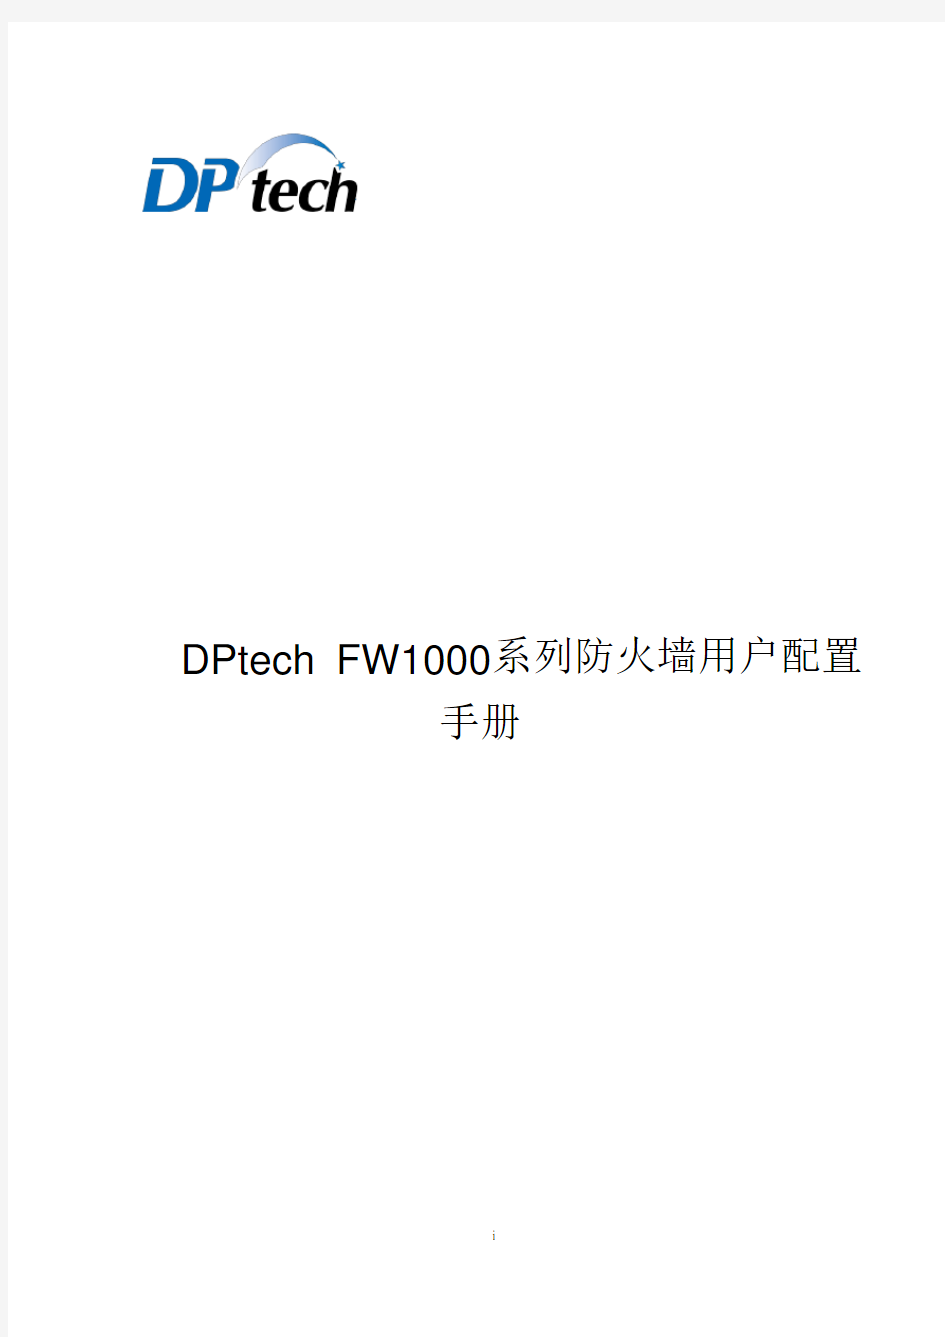 DPtech FW1000系列防火墙系统用户配置手册解析